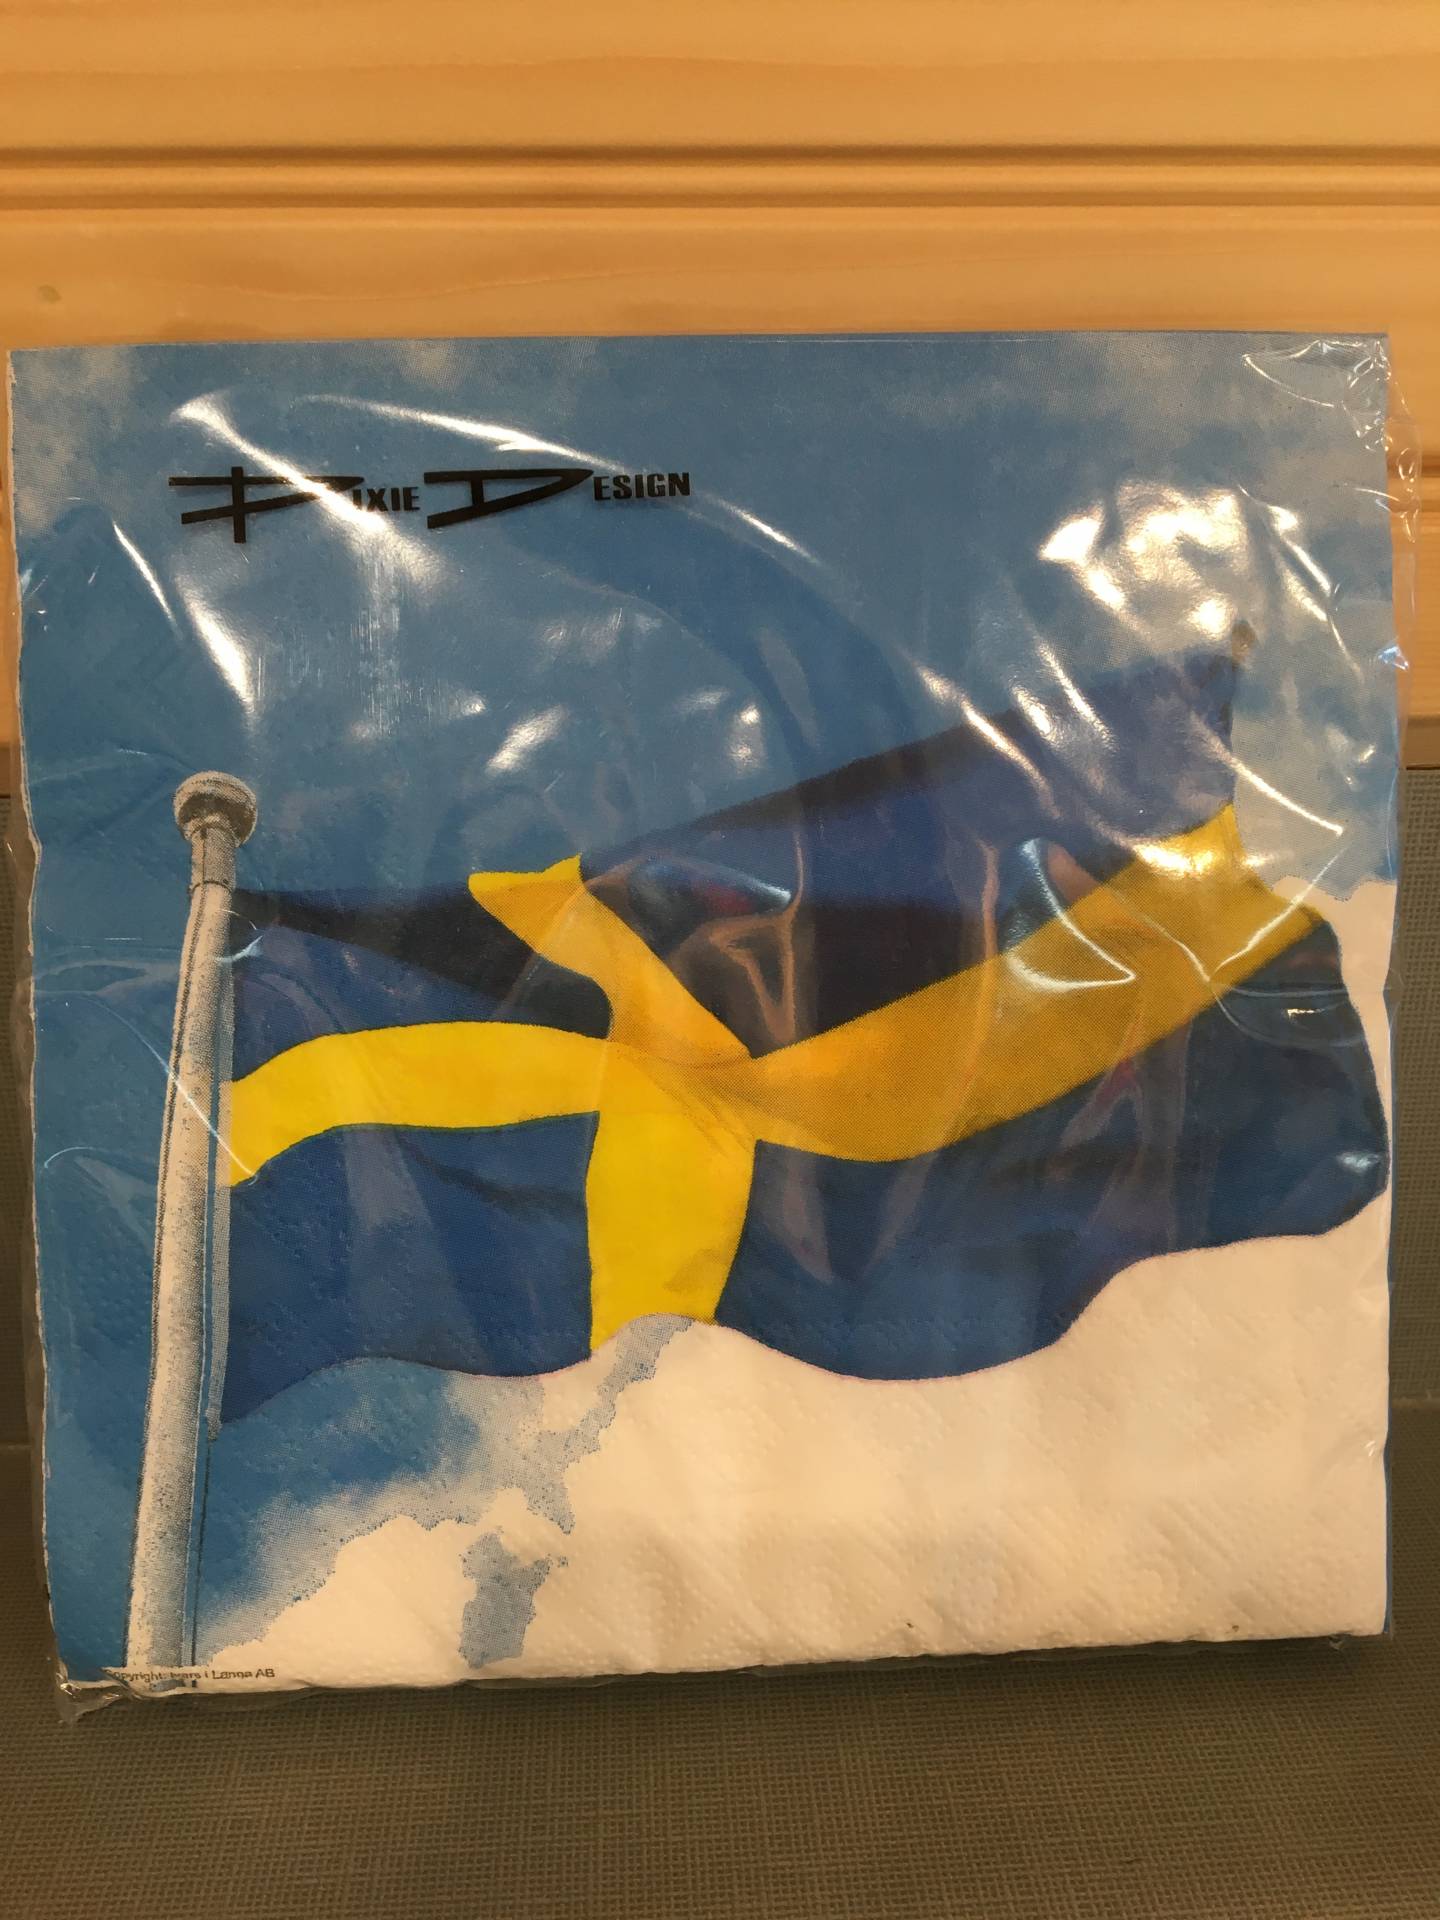 Swedish Dishcloth - Stabo - Stabo Imports